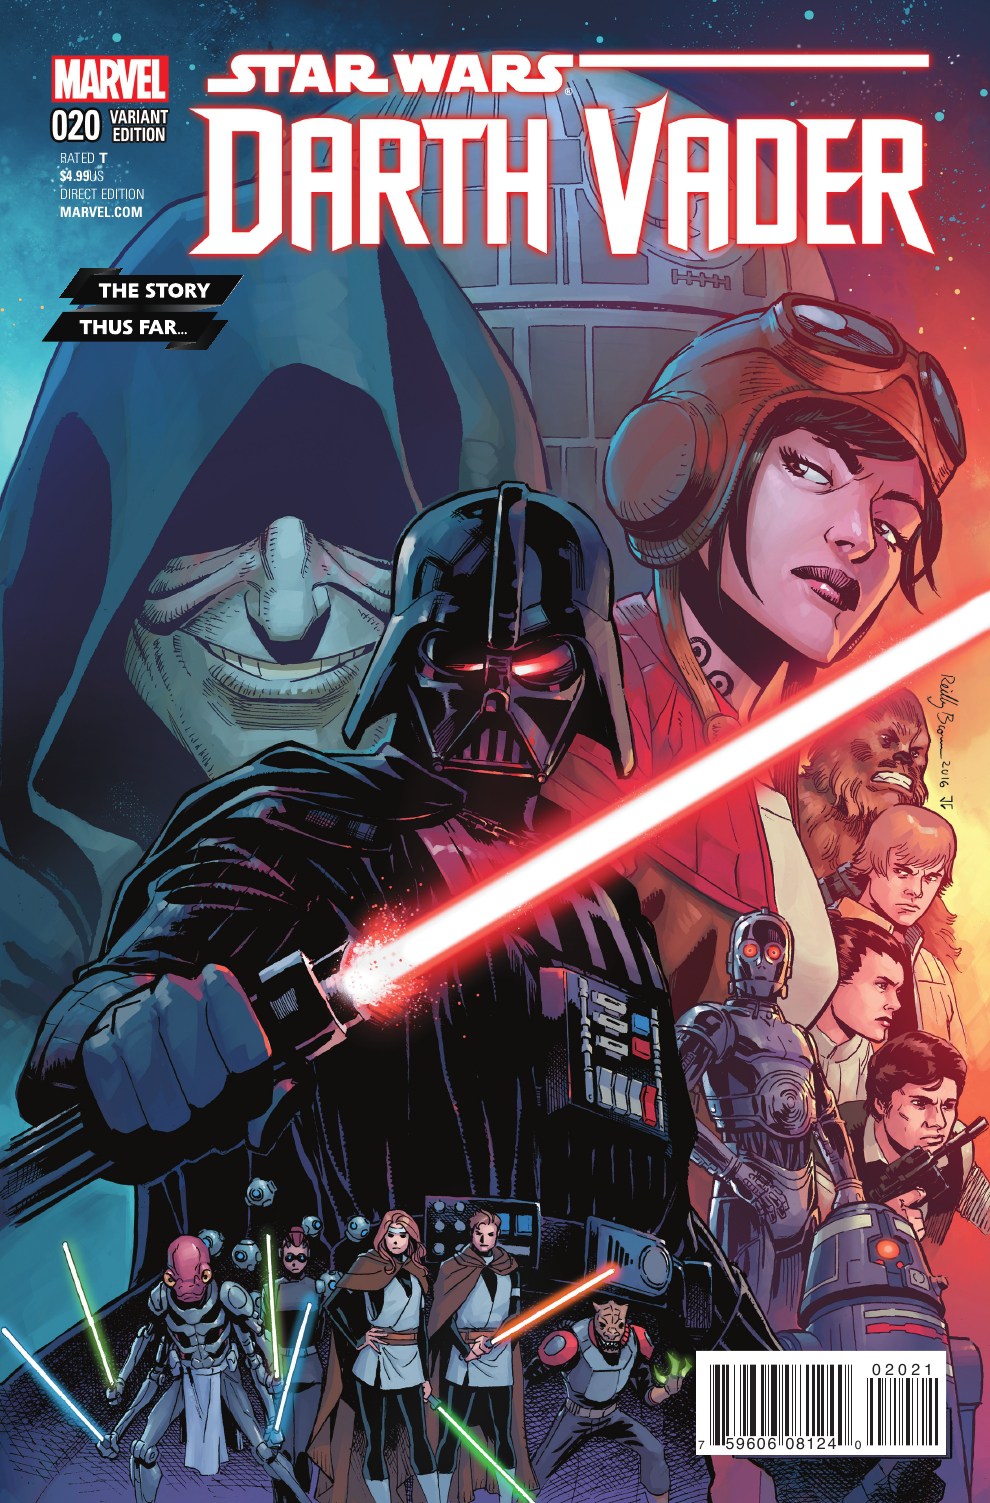 Darth Vader #20 (Story Thus Far Variant Cover) (11.05.2016)